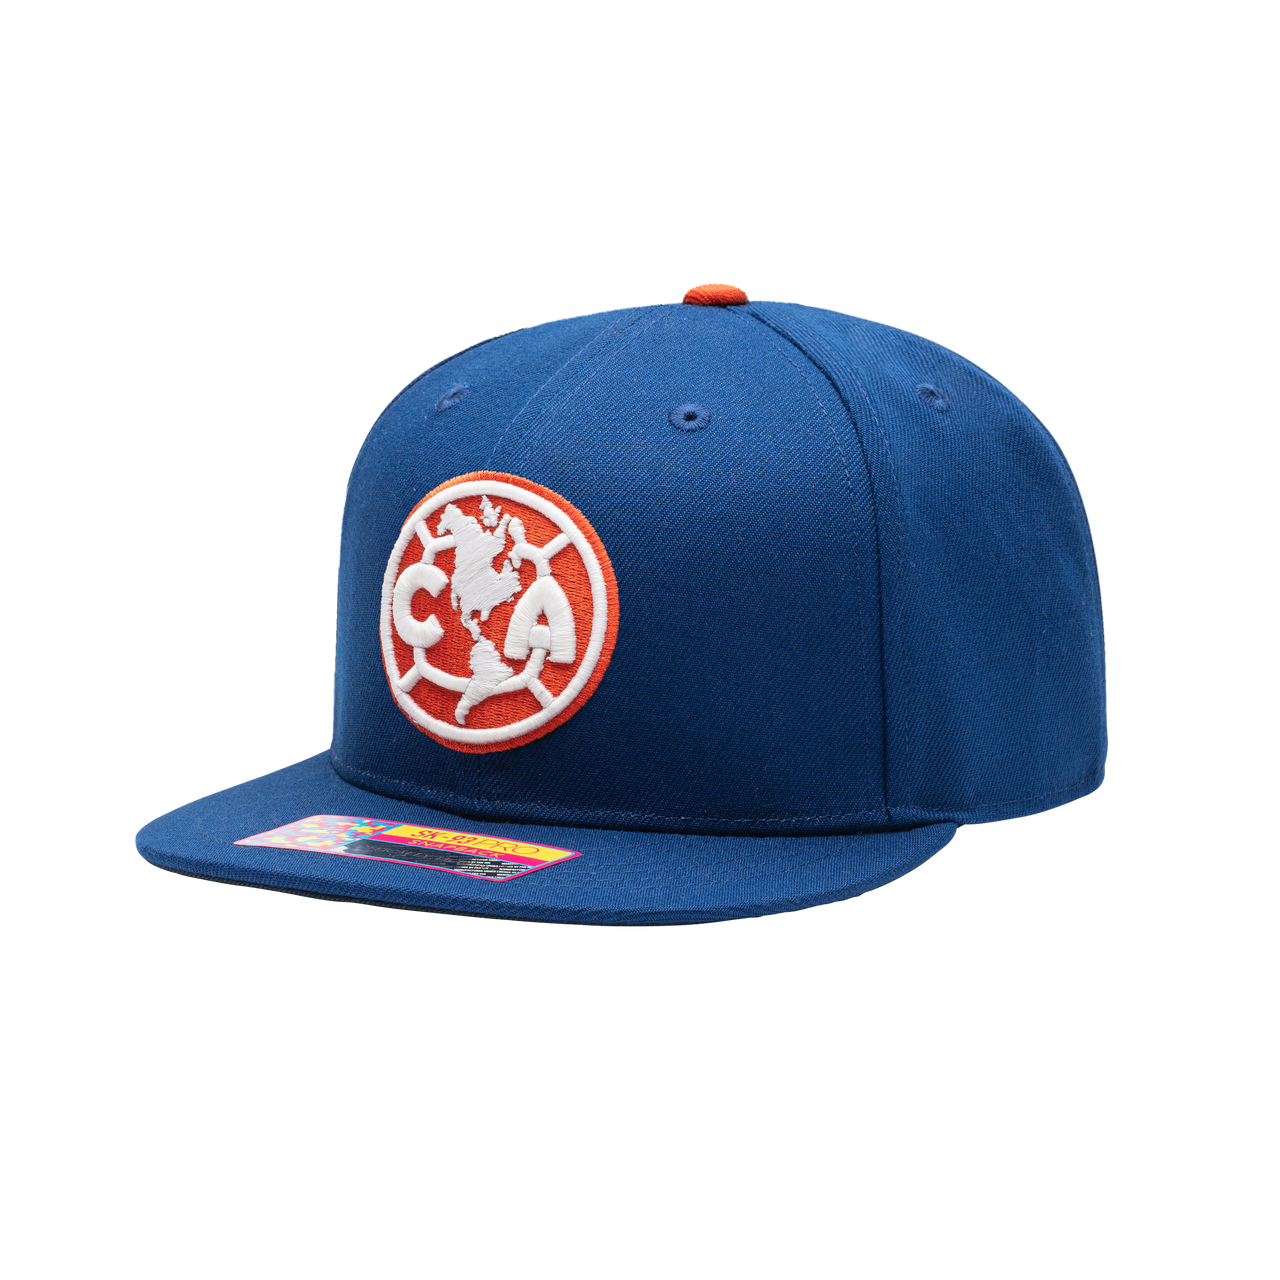 Club America 'America's Game' Glow in the Dark Logo hat